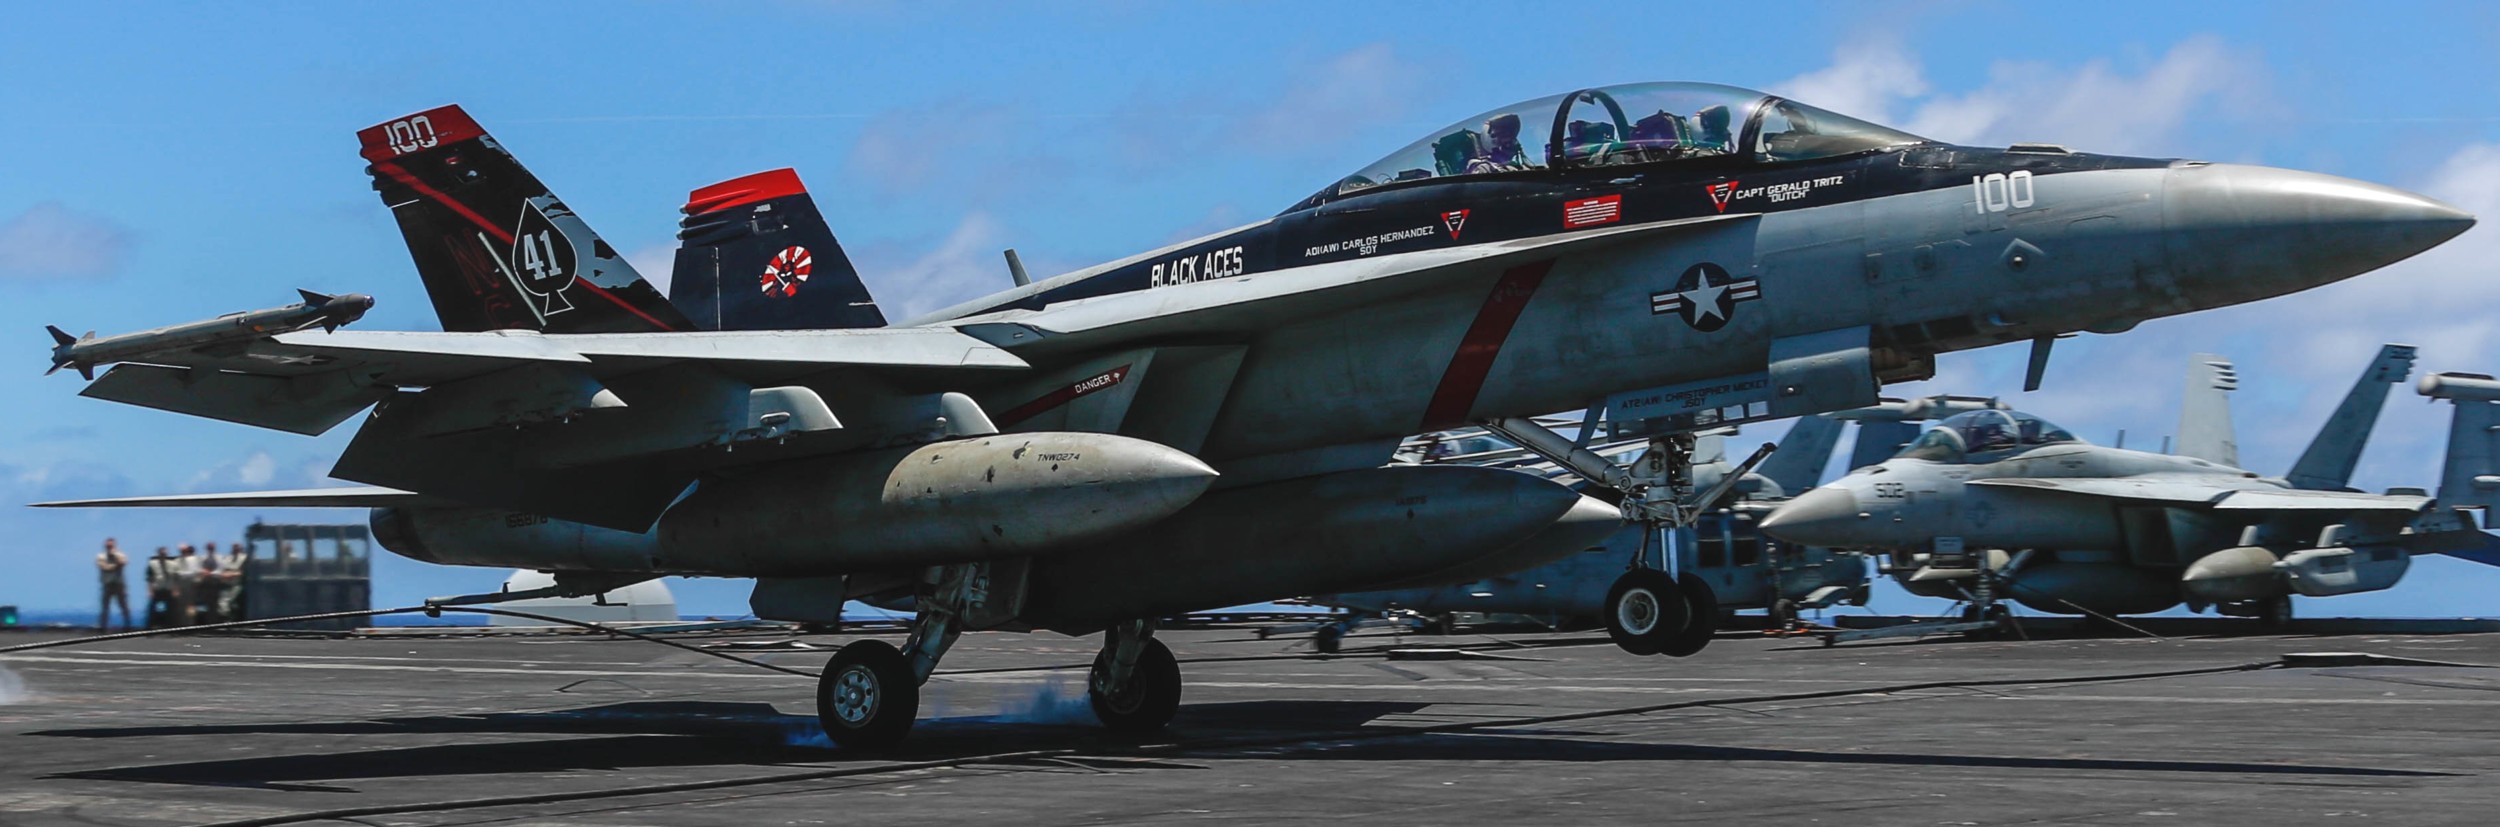 vfa-41 black aces strike fighter squadron f/a-18f super hornet cvw-9 cvn-72 uss abraham lincoln us navy 89